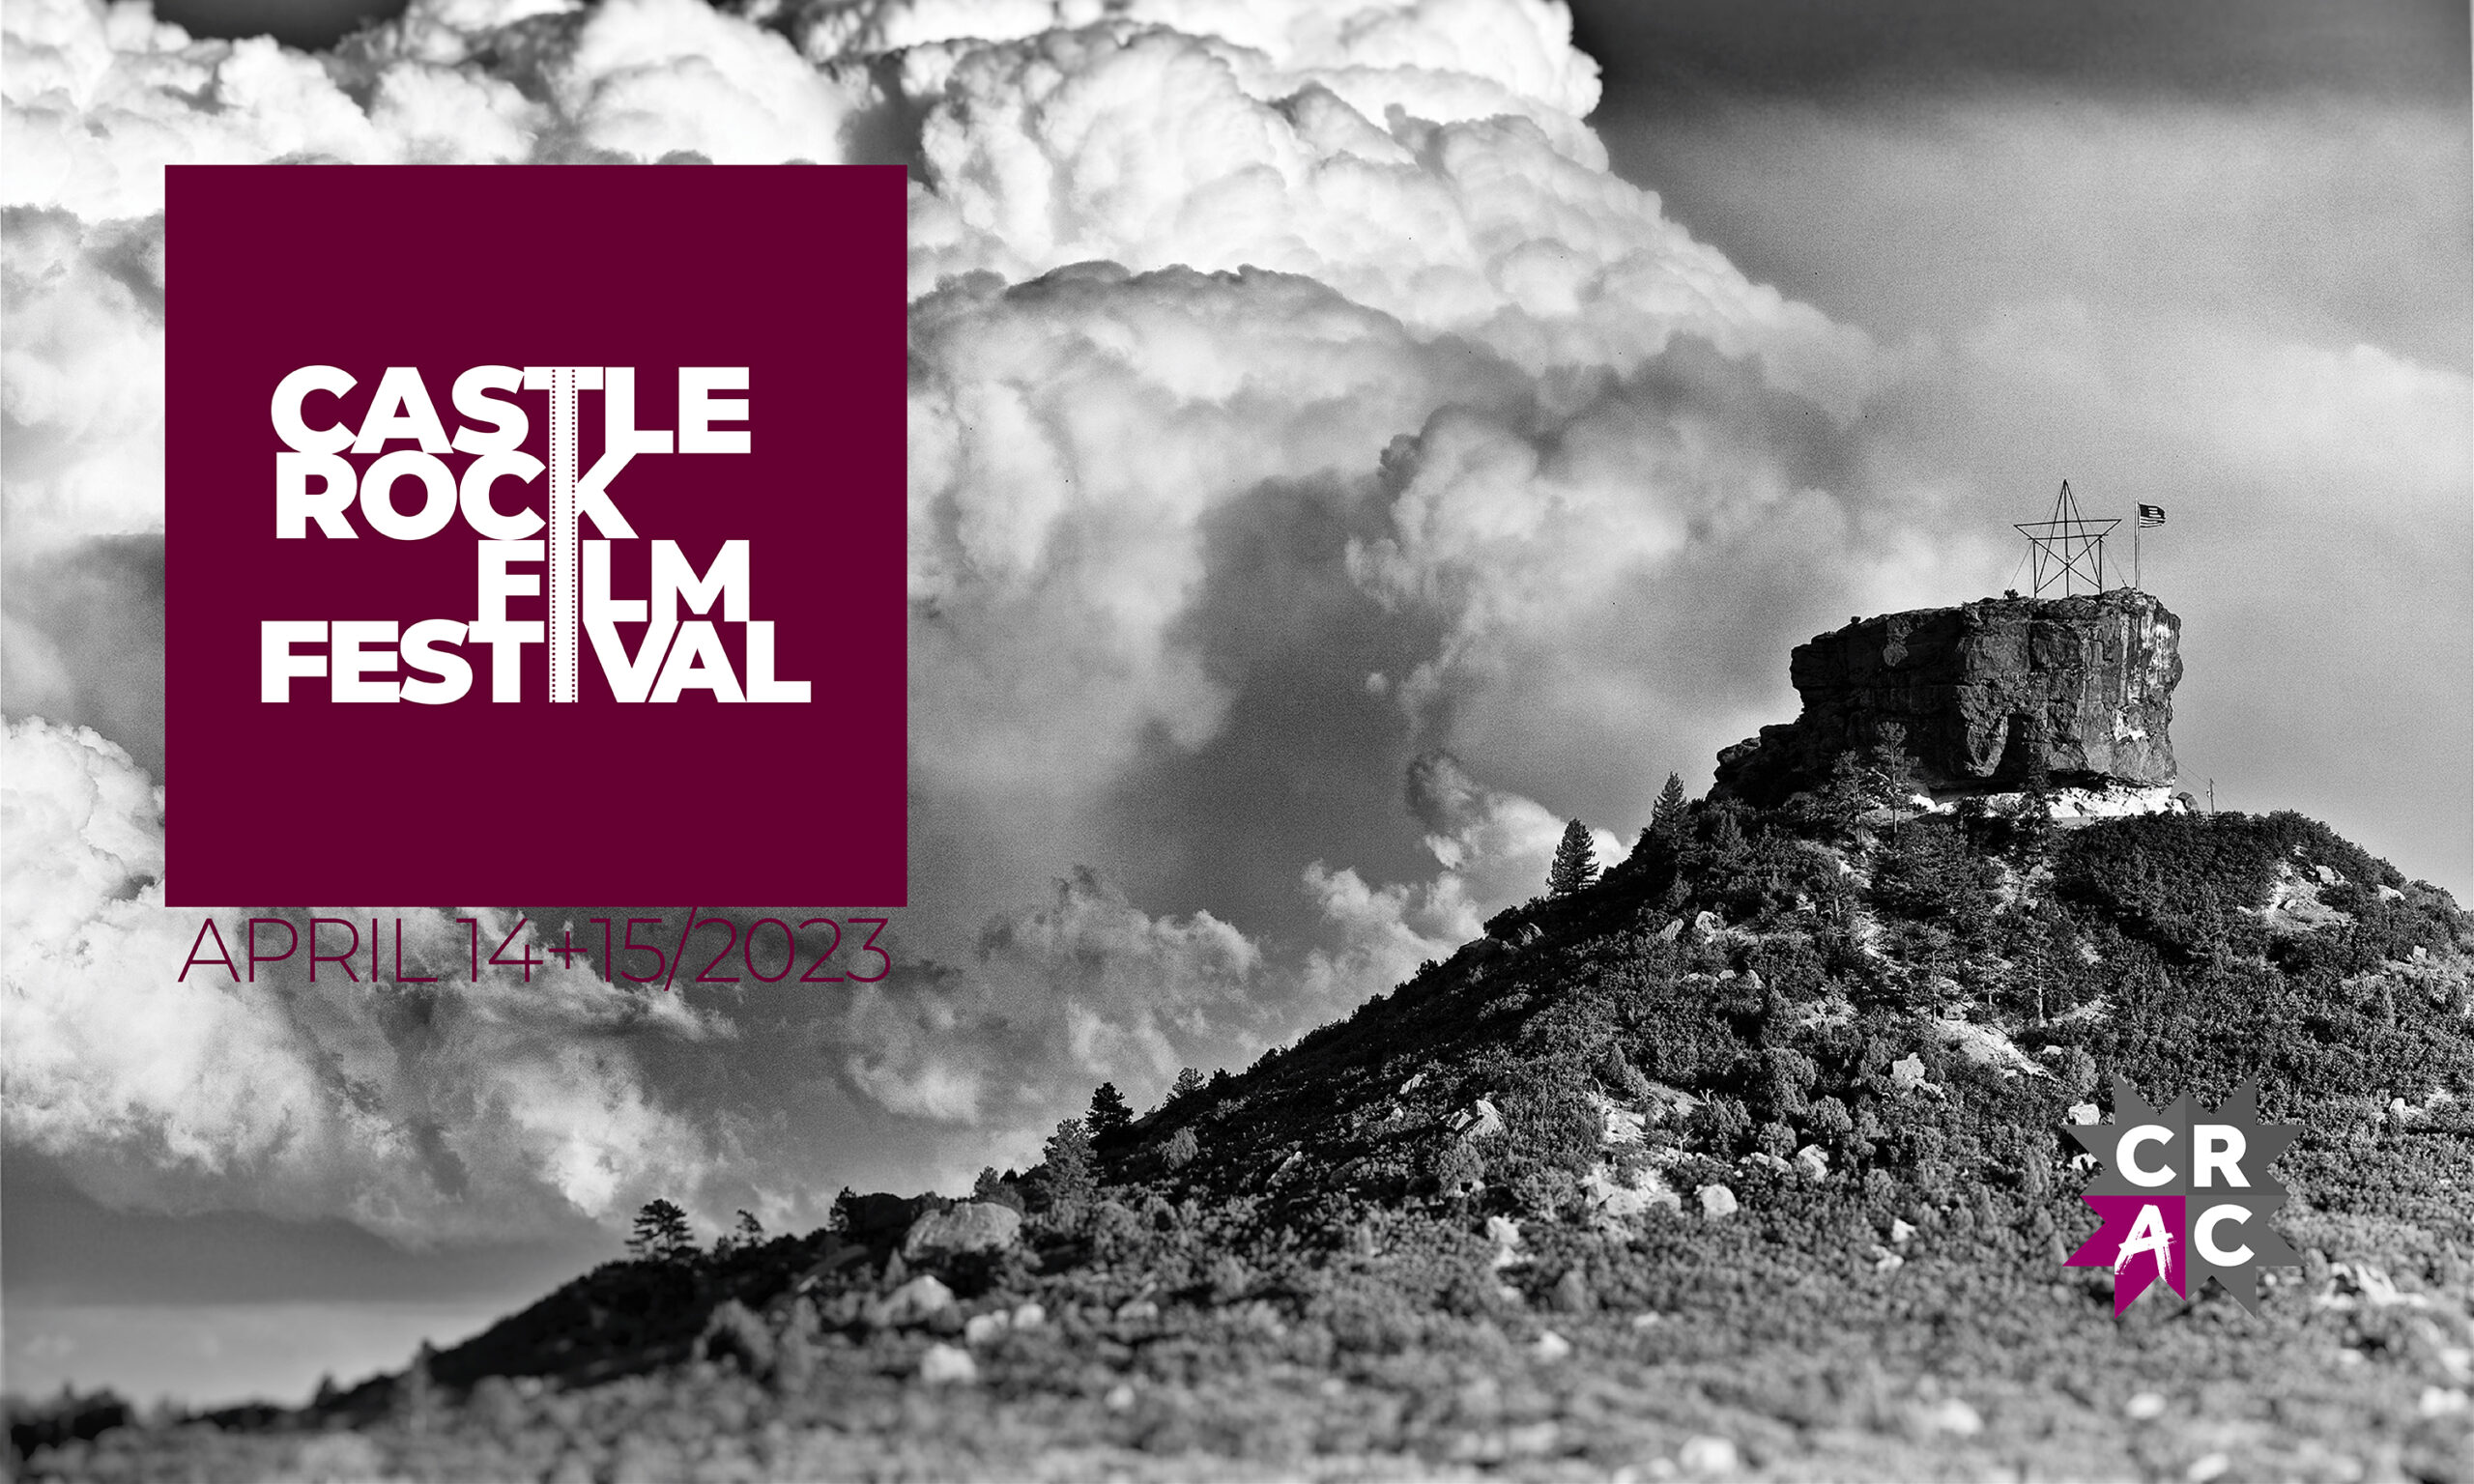 Castle Rock Film Festival, which takes place annually in Castle Rock, Colorado.